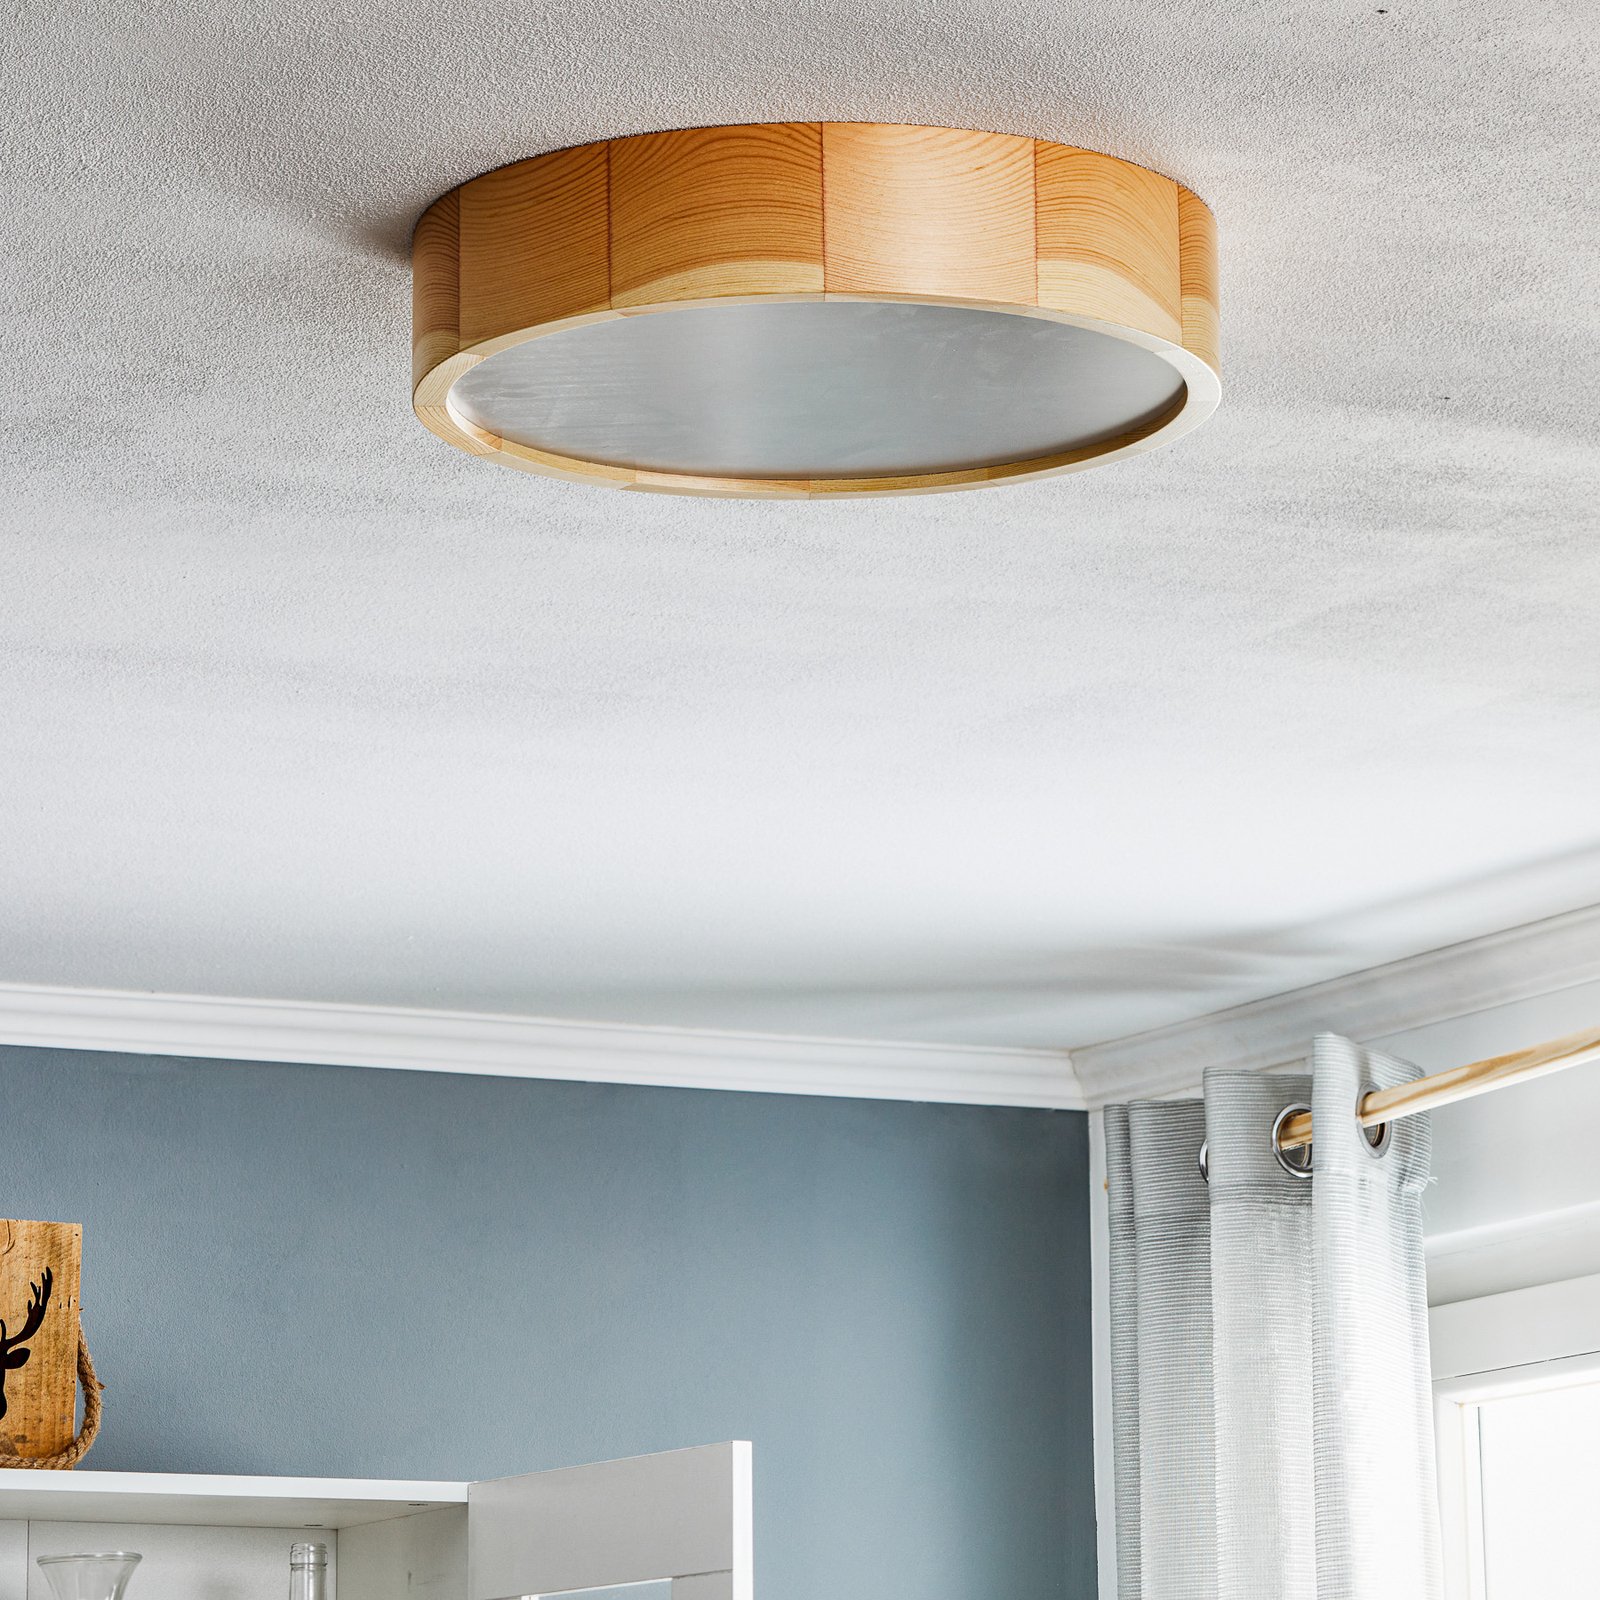 Cleo ceiling light made of pine wood, Ø 37.5 cm